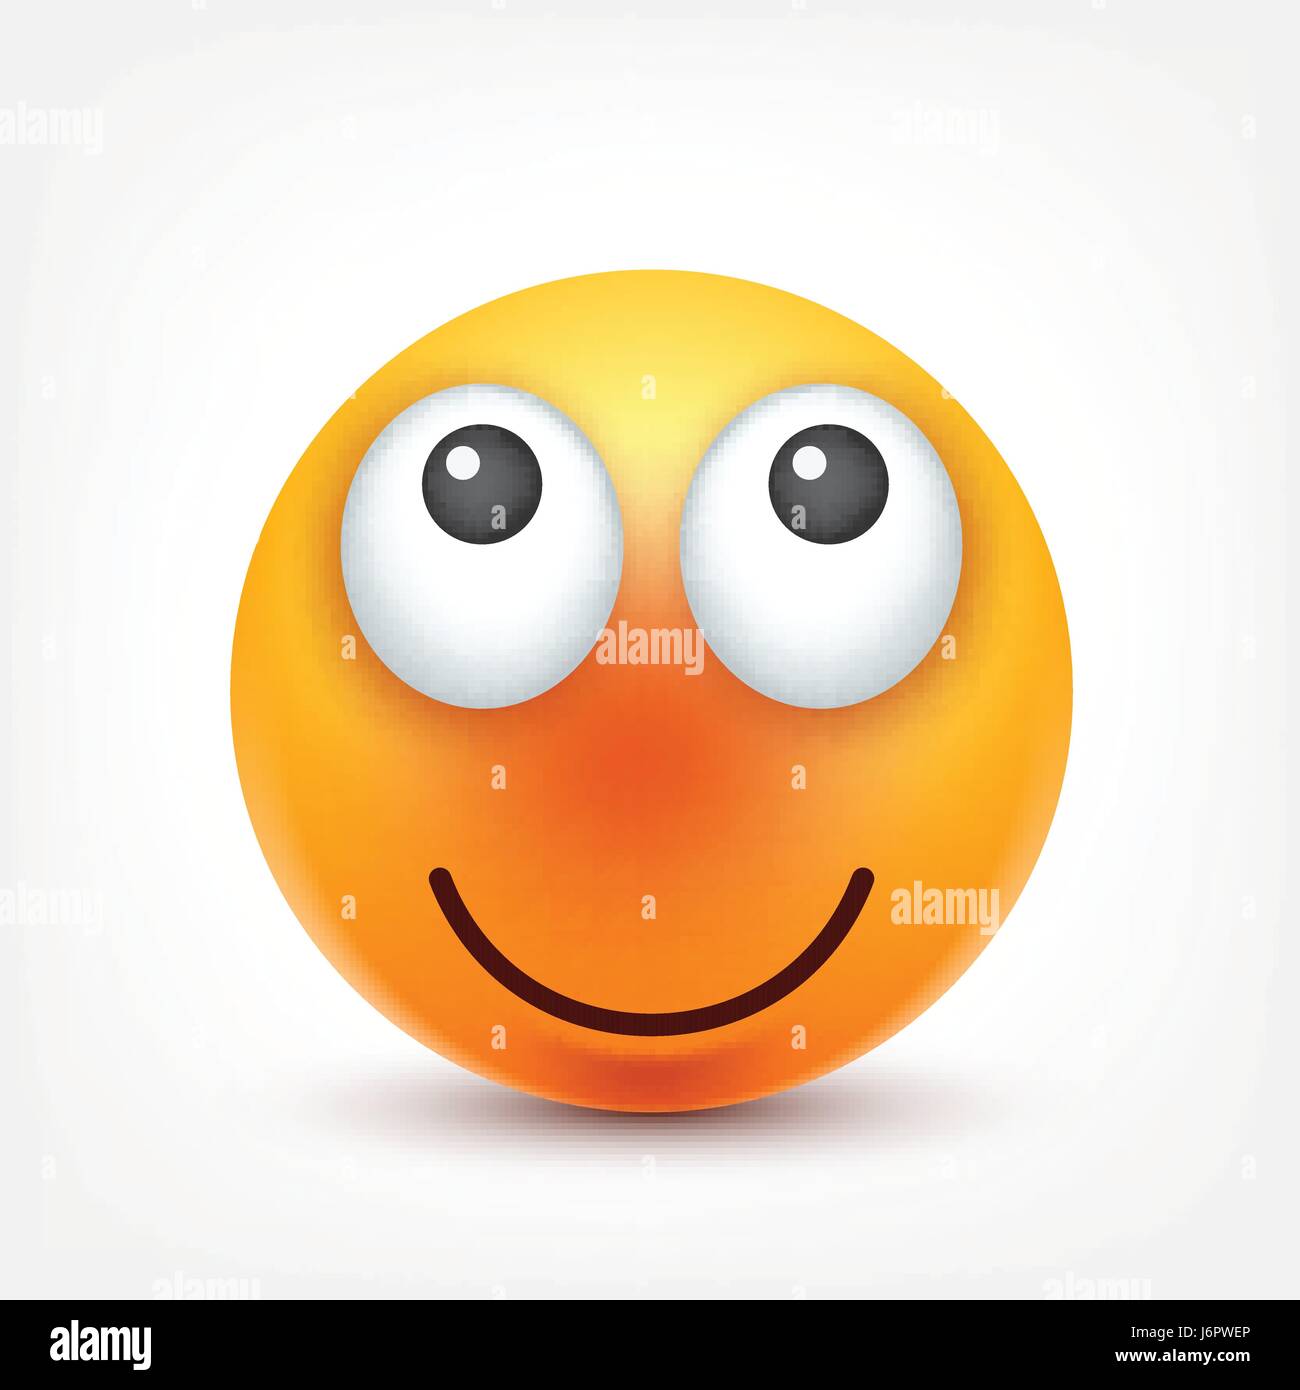 Smiley Souriant Emoticone Avant Jaune Avec Des Emotions L Expression Du Visage Emoji 3d Realiste Funny Cartoon Character L Humeur L Icone Web Vector Illustration Image Vectorielle Stock Alamy